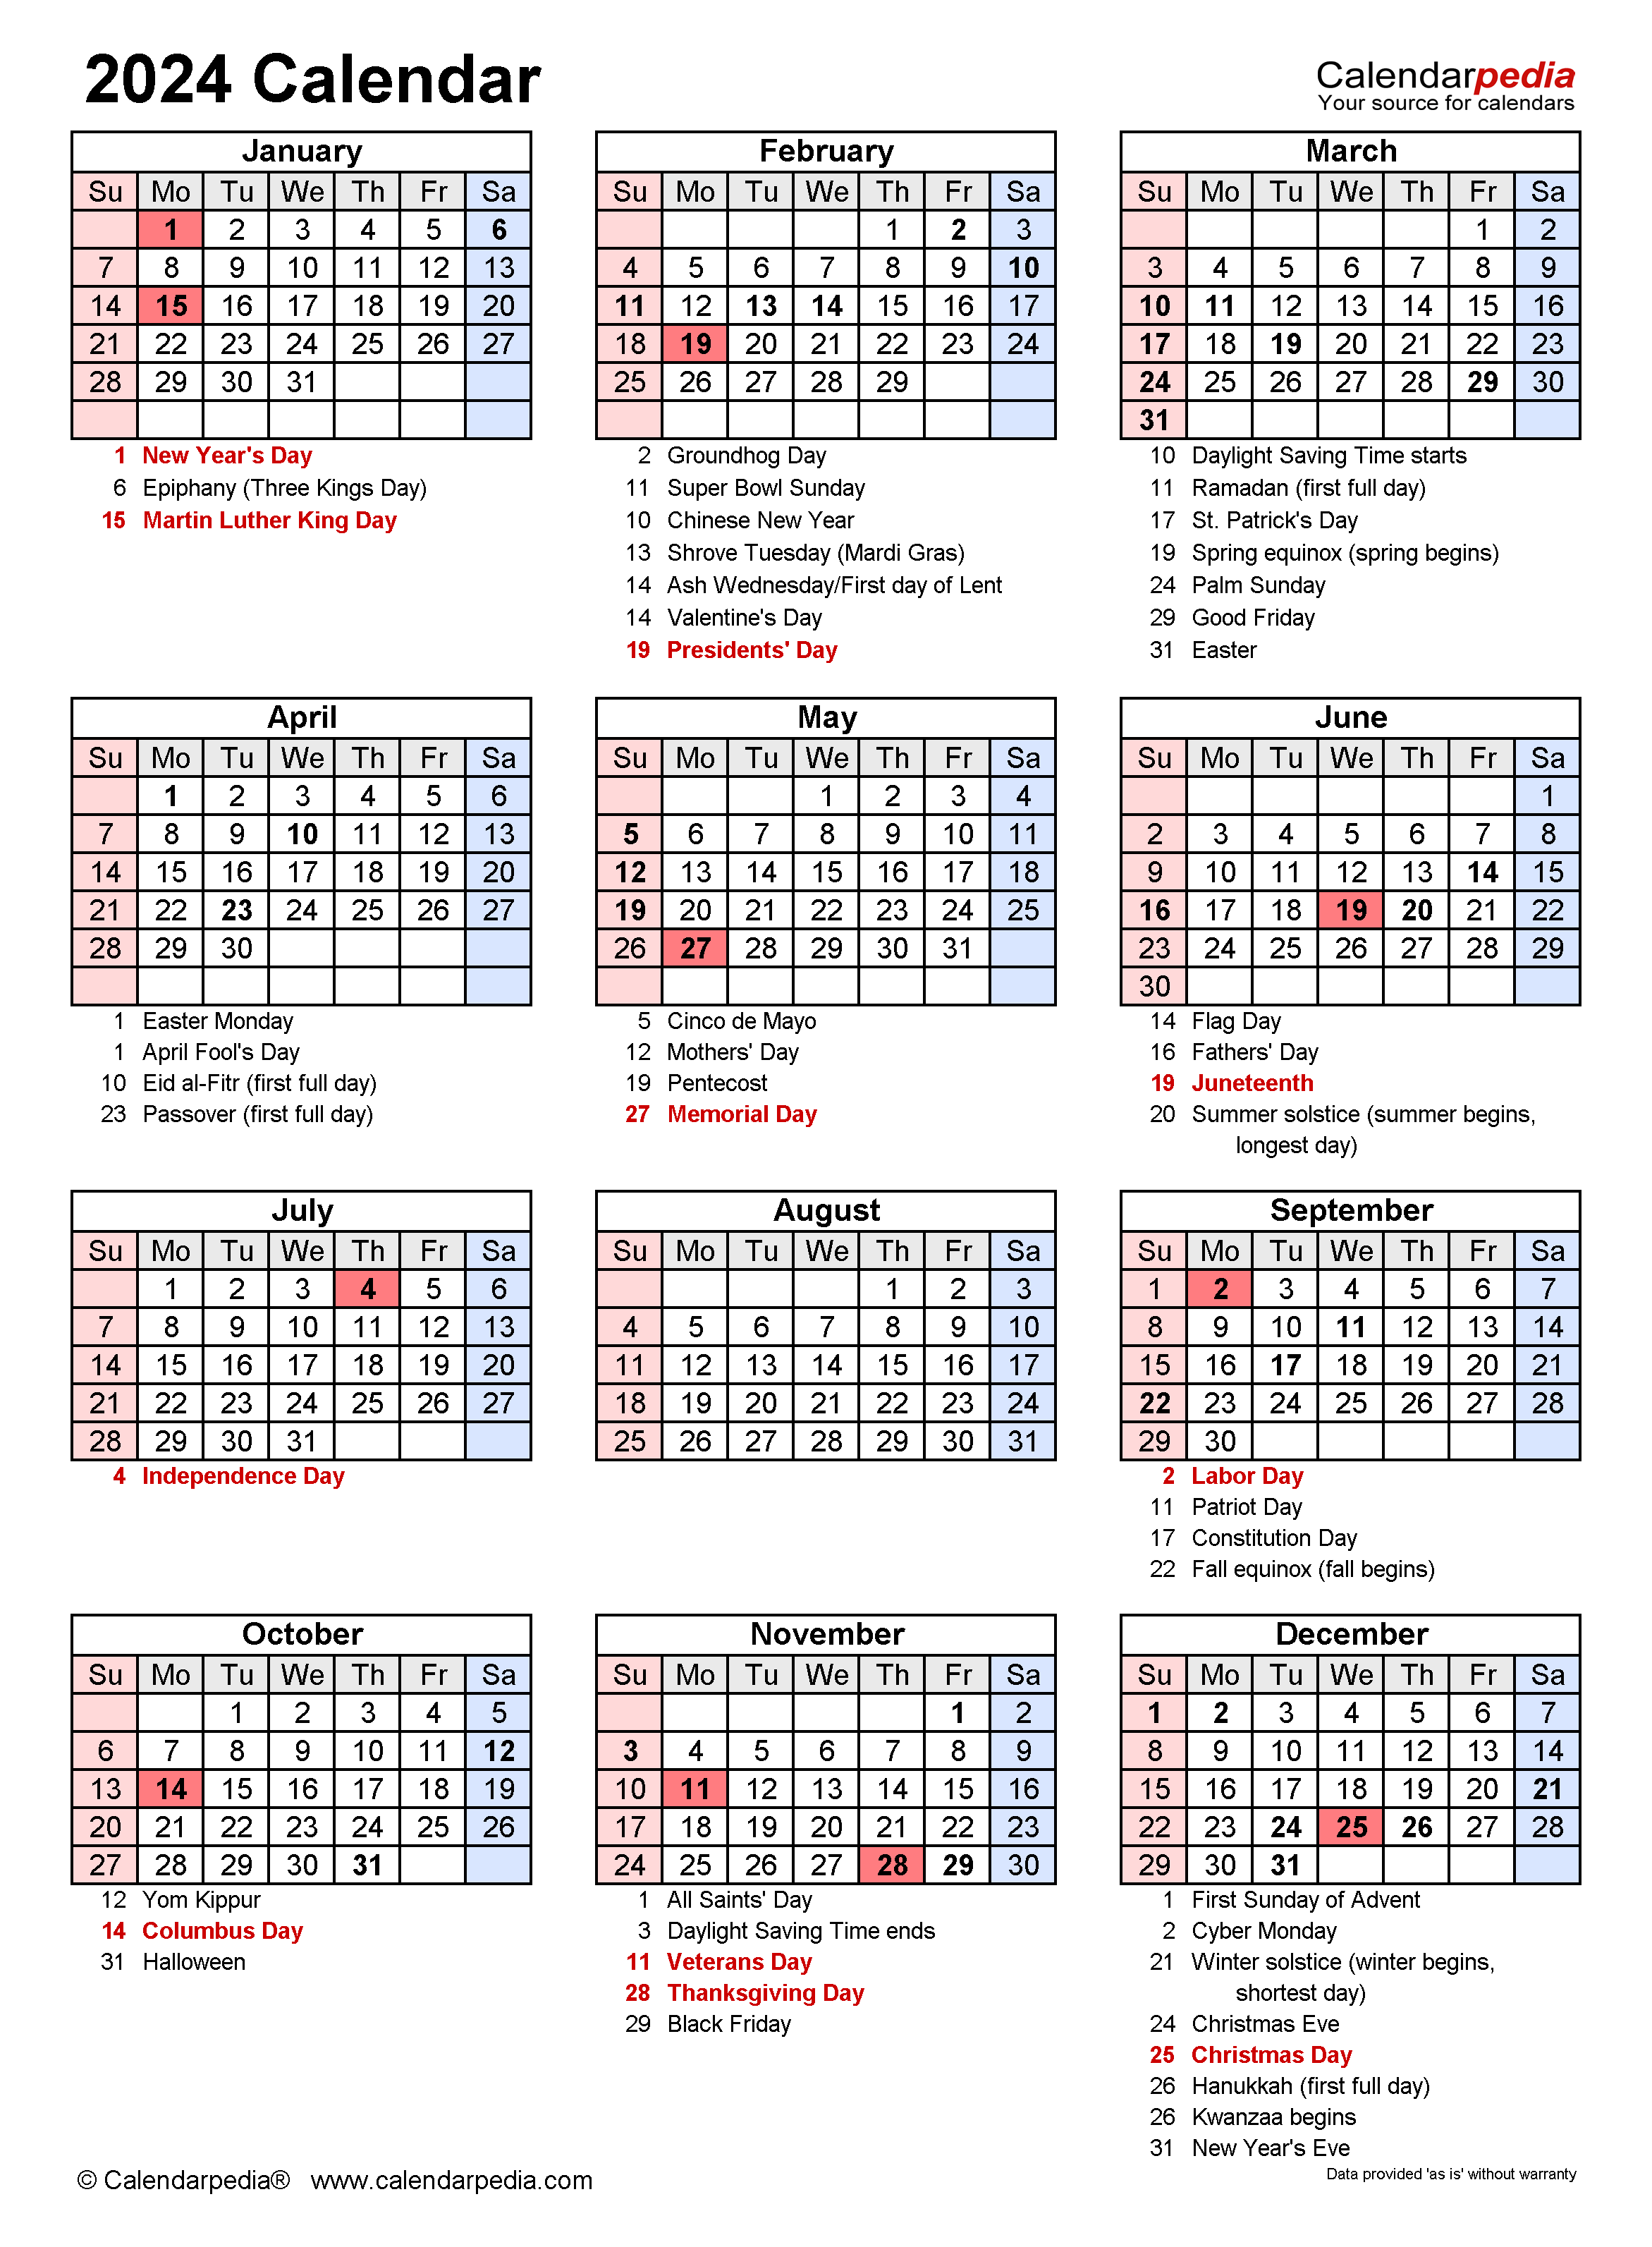 2024 Calendar Free Printable PDF Templates Calendarpedia - Free Printable 2024 Federal Holiday Calendar Word